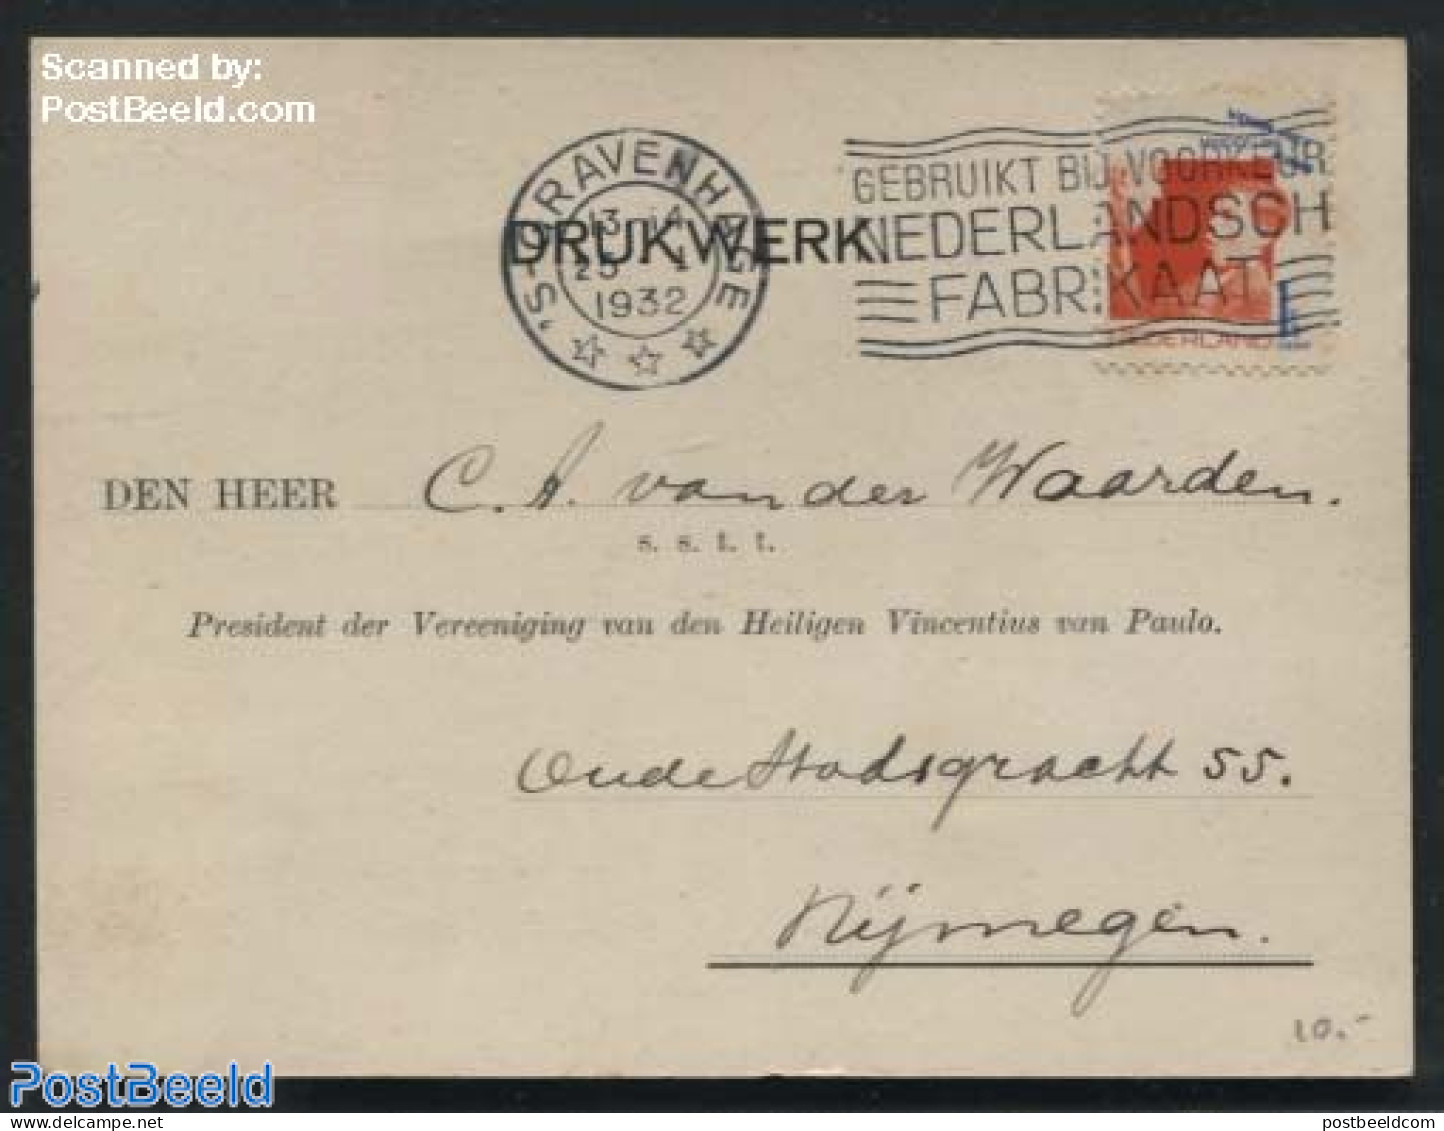 Netherlands 1931 Postal Card From The Hague To Nijmegen, Postal History - Briefe U. Dokumente